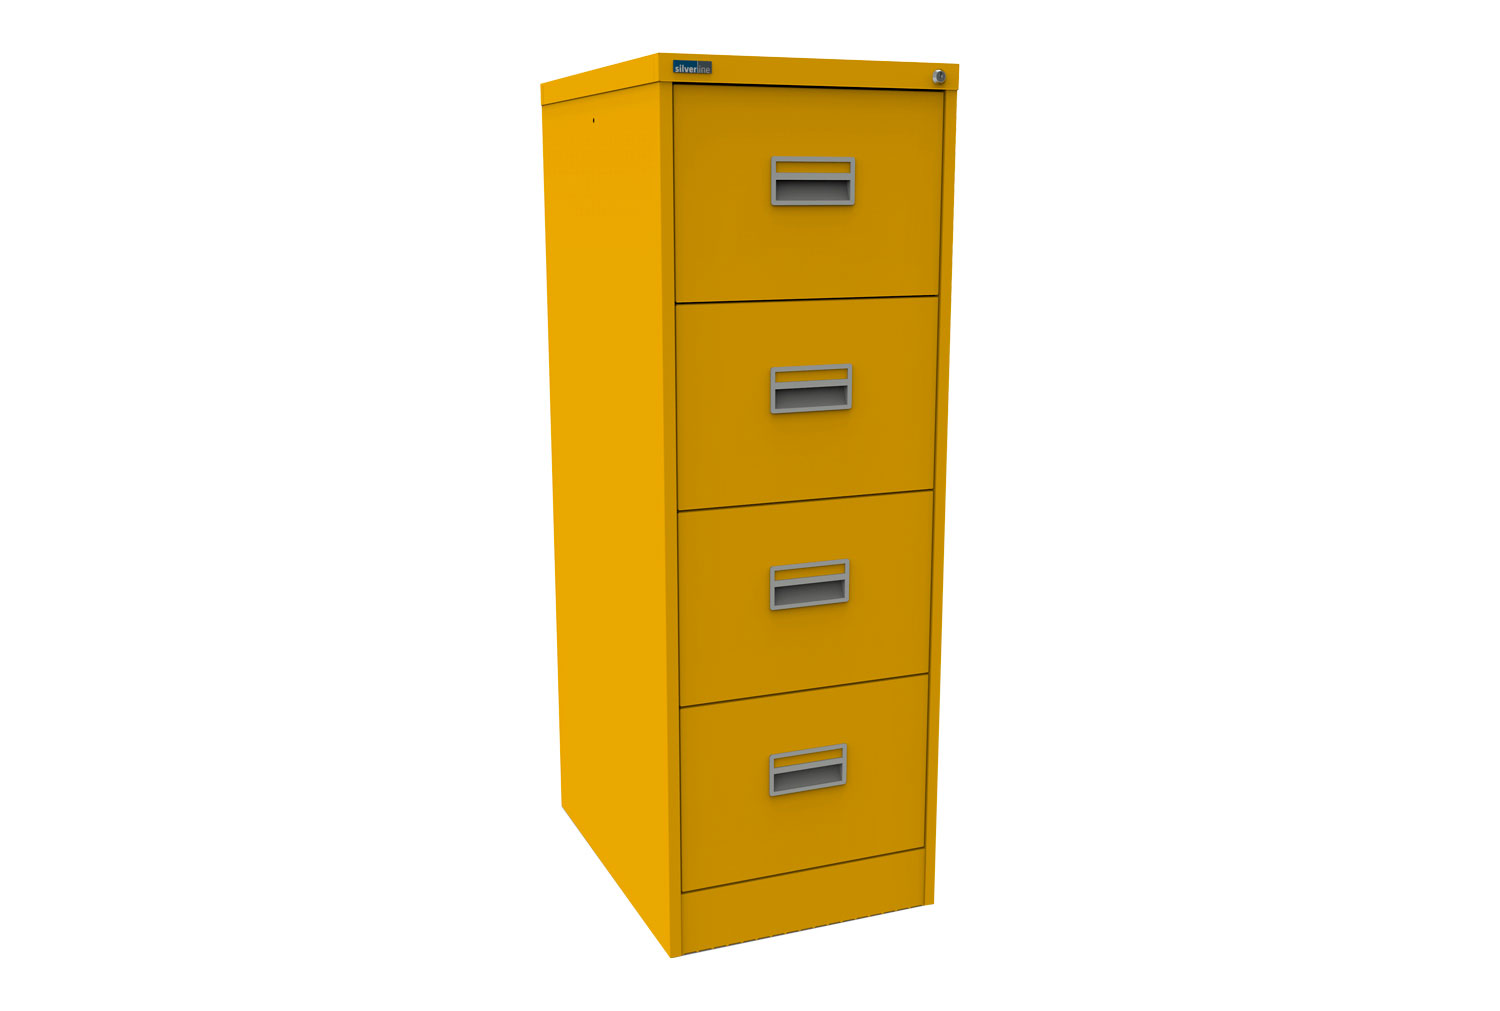 Silverline Midi 4 Drawer Filing Cabinets, 4 Drawer - 46wx62dx132h (cm), Sunshine Yellow